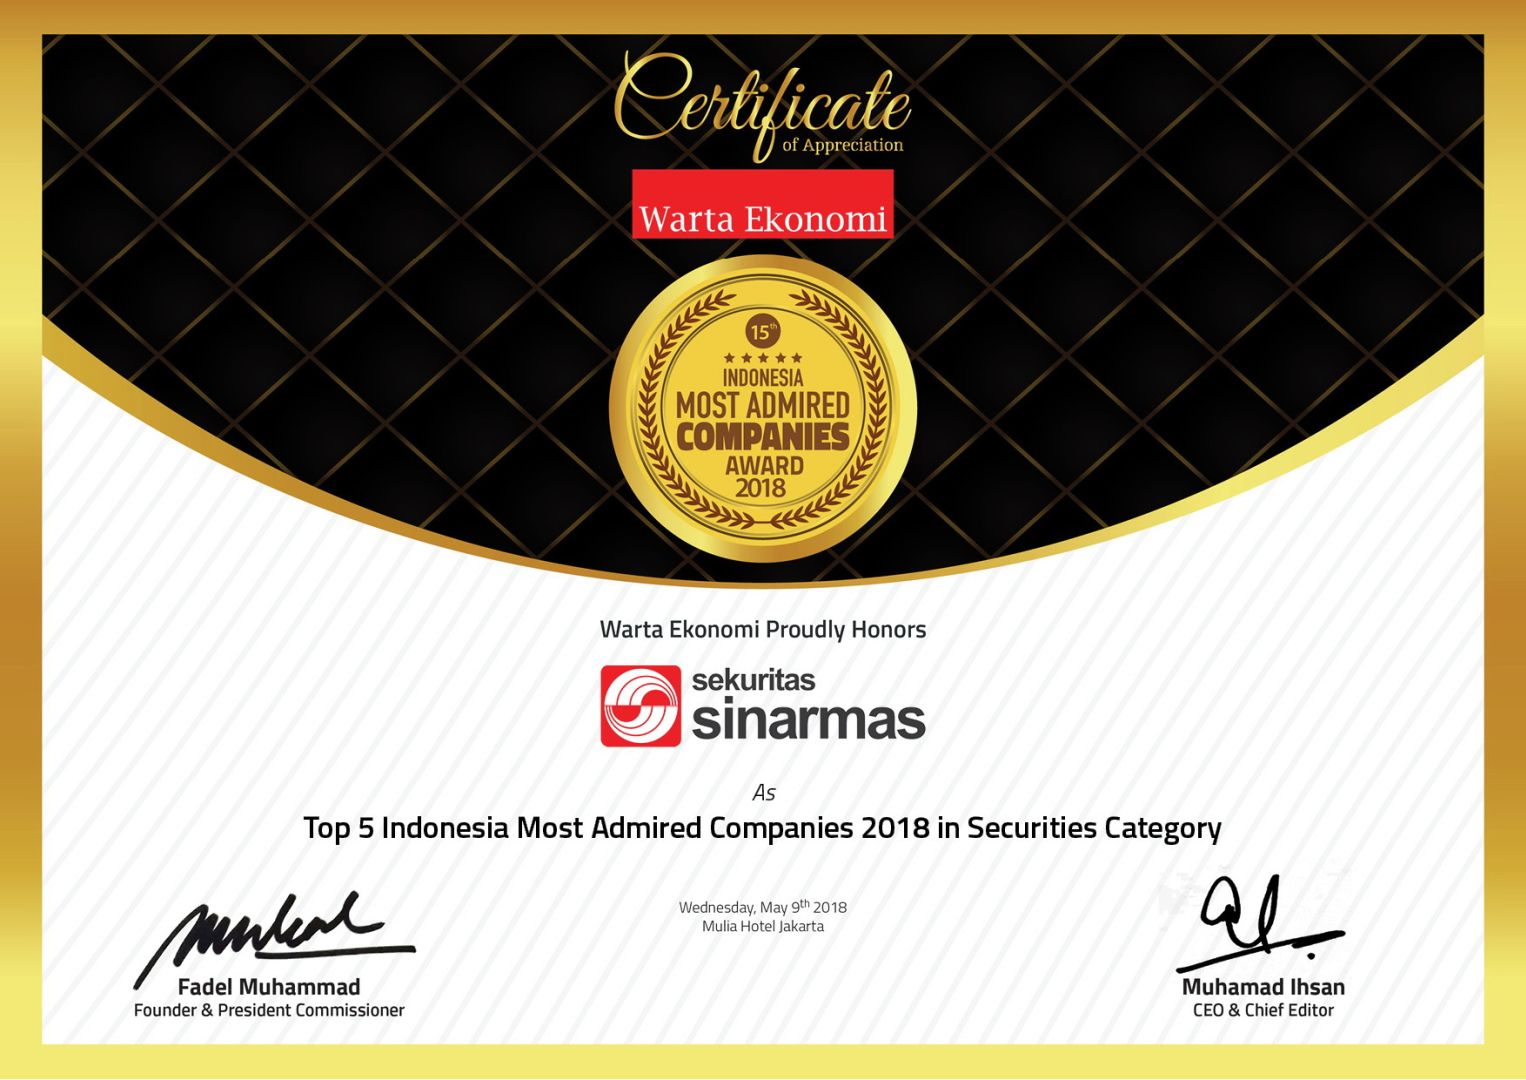 Warta Ekonomi: Top 5 Indonesia Most Admired Companies 2018